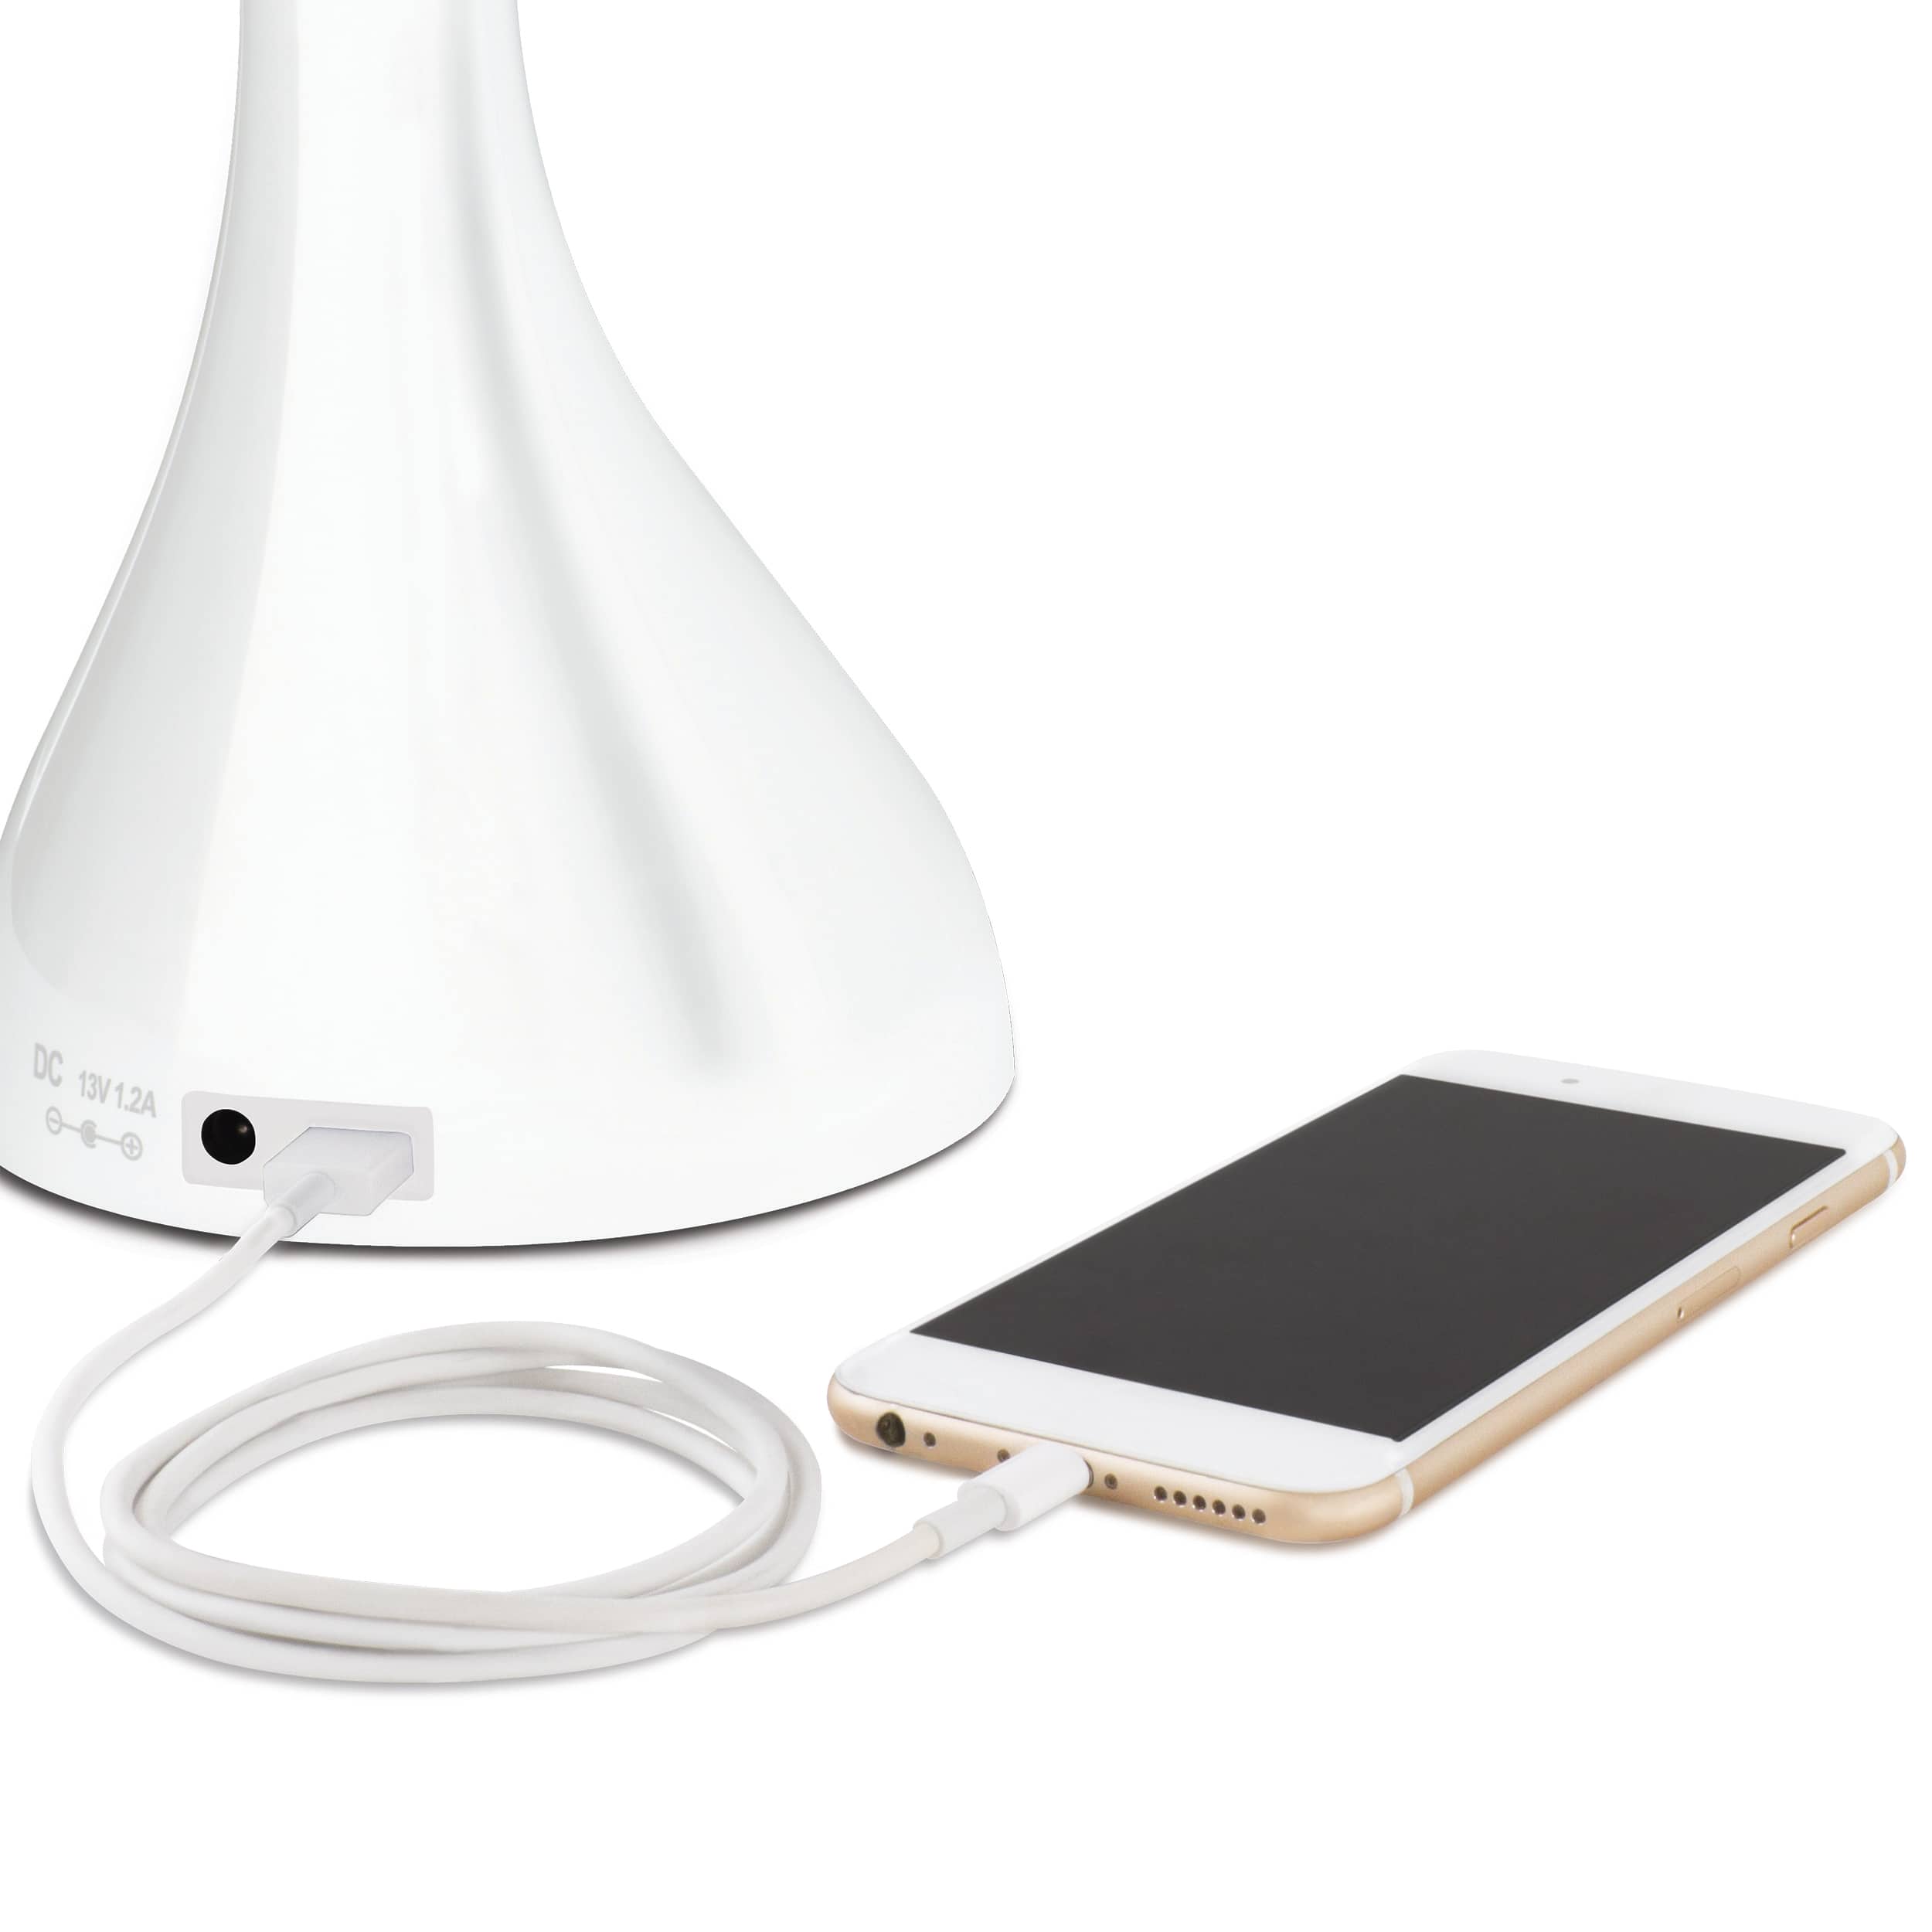 OttLite Creative Curves LED Desk Lamp with USB Port